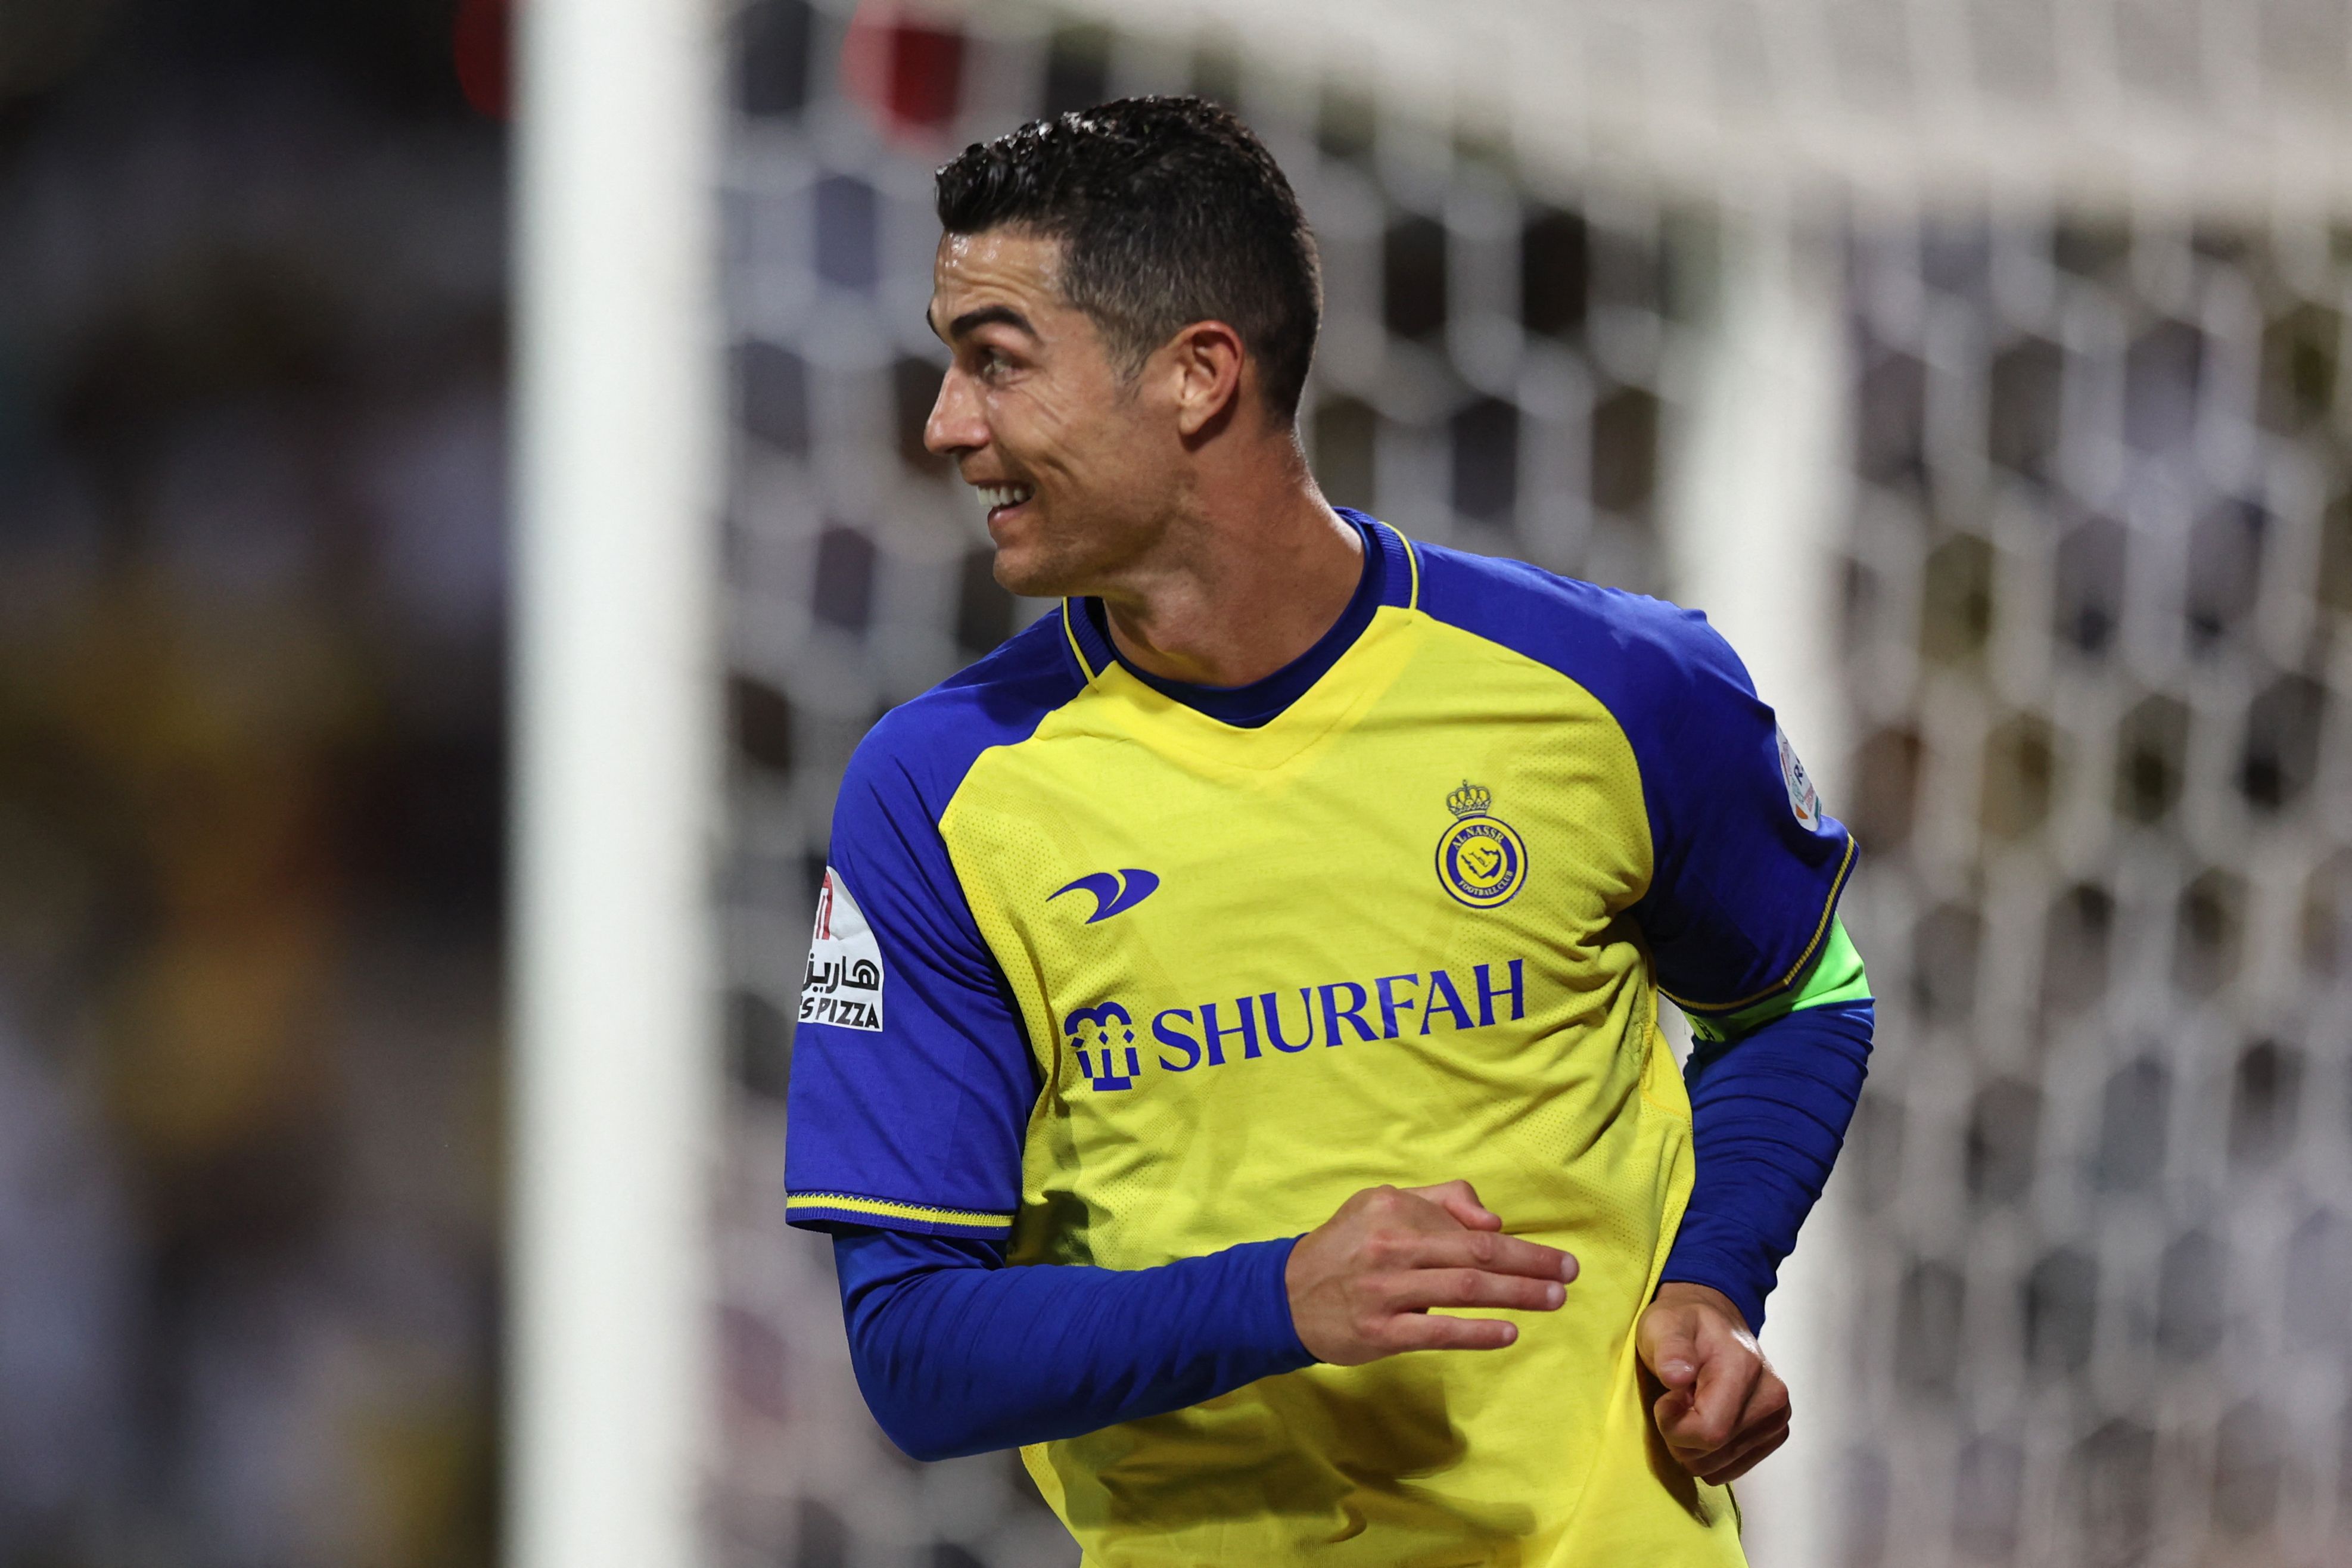 Cristiano Ronaldo celebrates Saudi Founding Day with Al Nassr Club on Make  a GIF